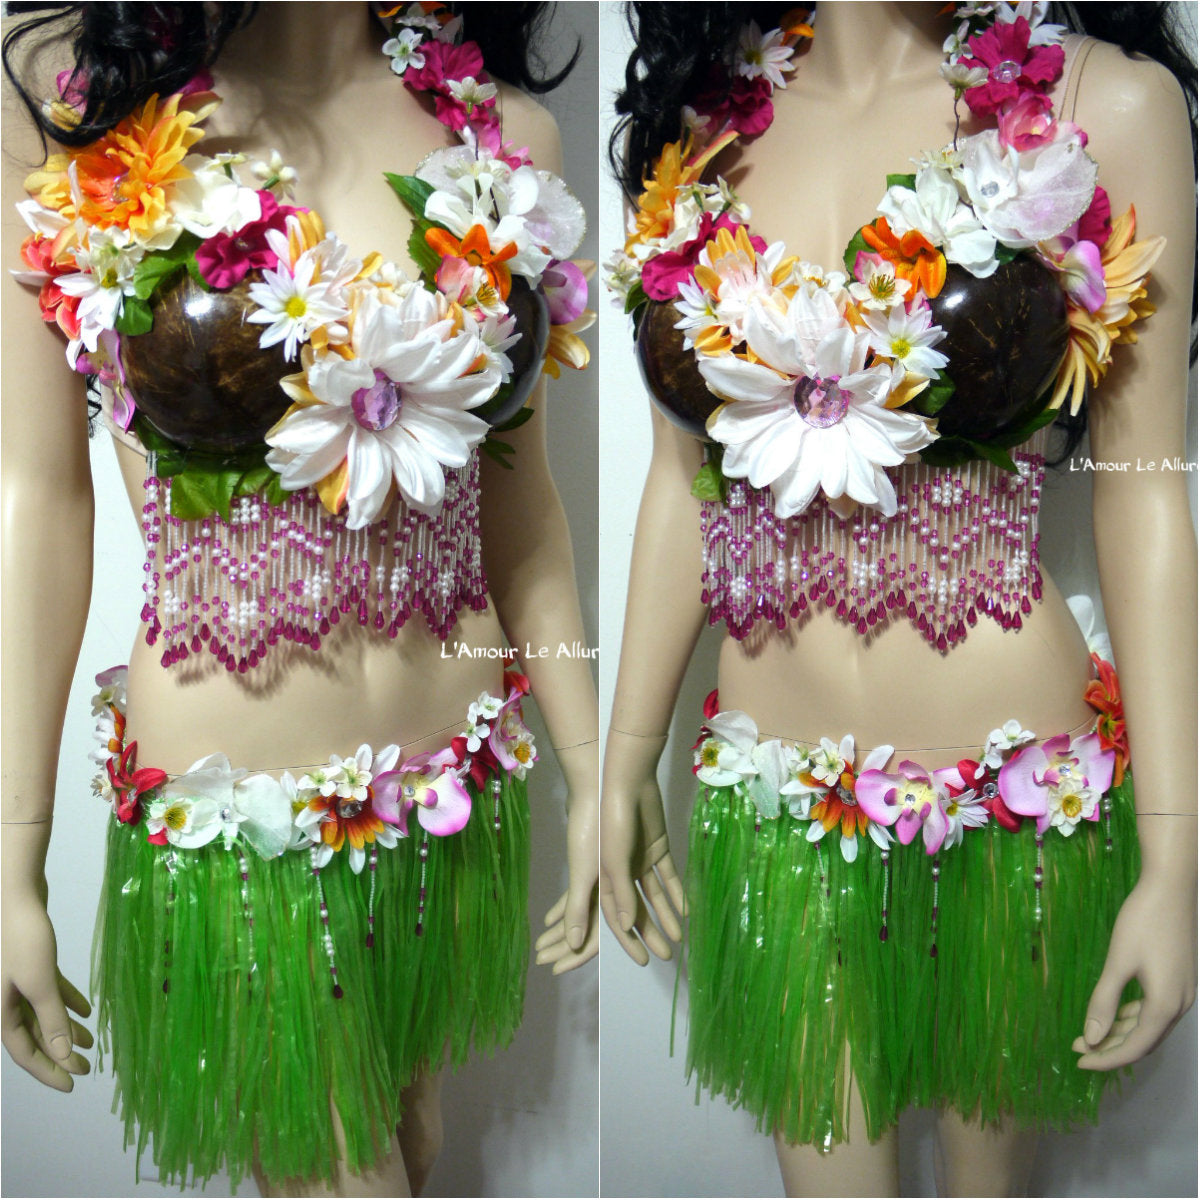 Deluxe Hawaiian Luau Womens Coconut Bra Raffia Skirt 5pc Hula Costume